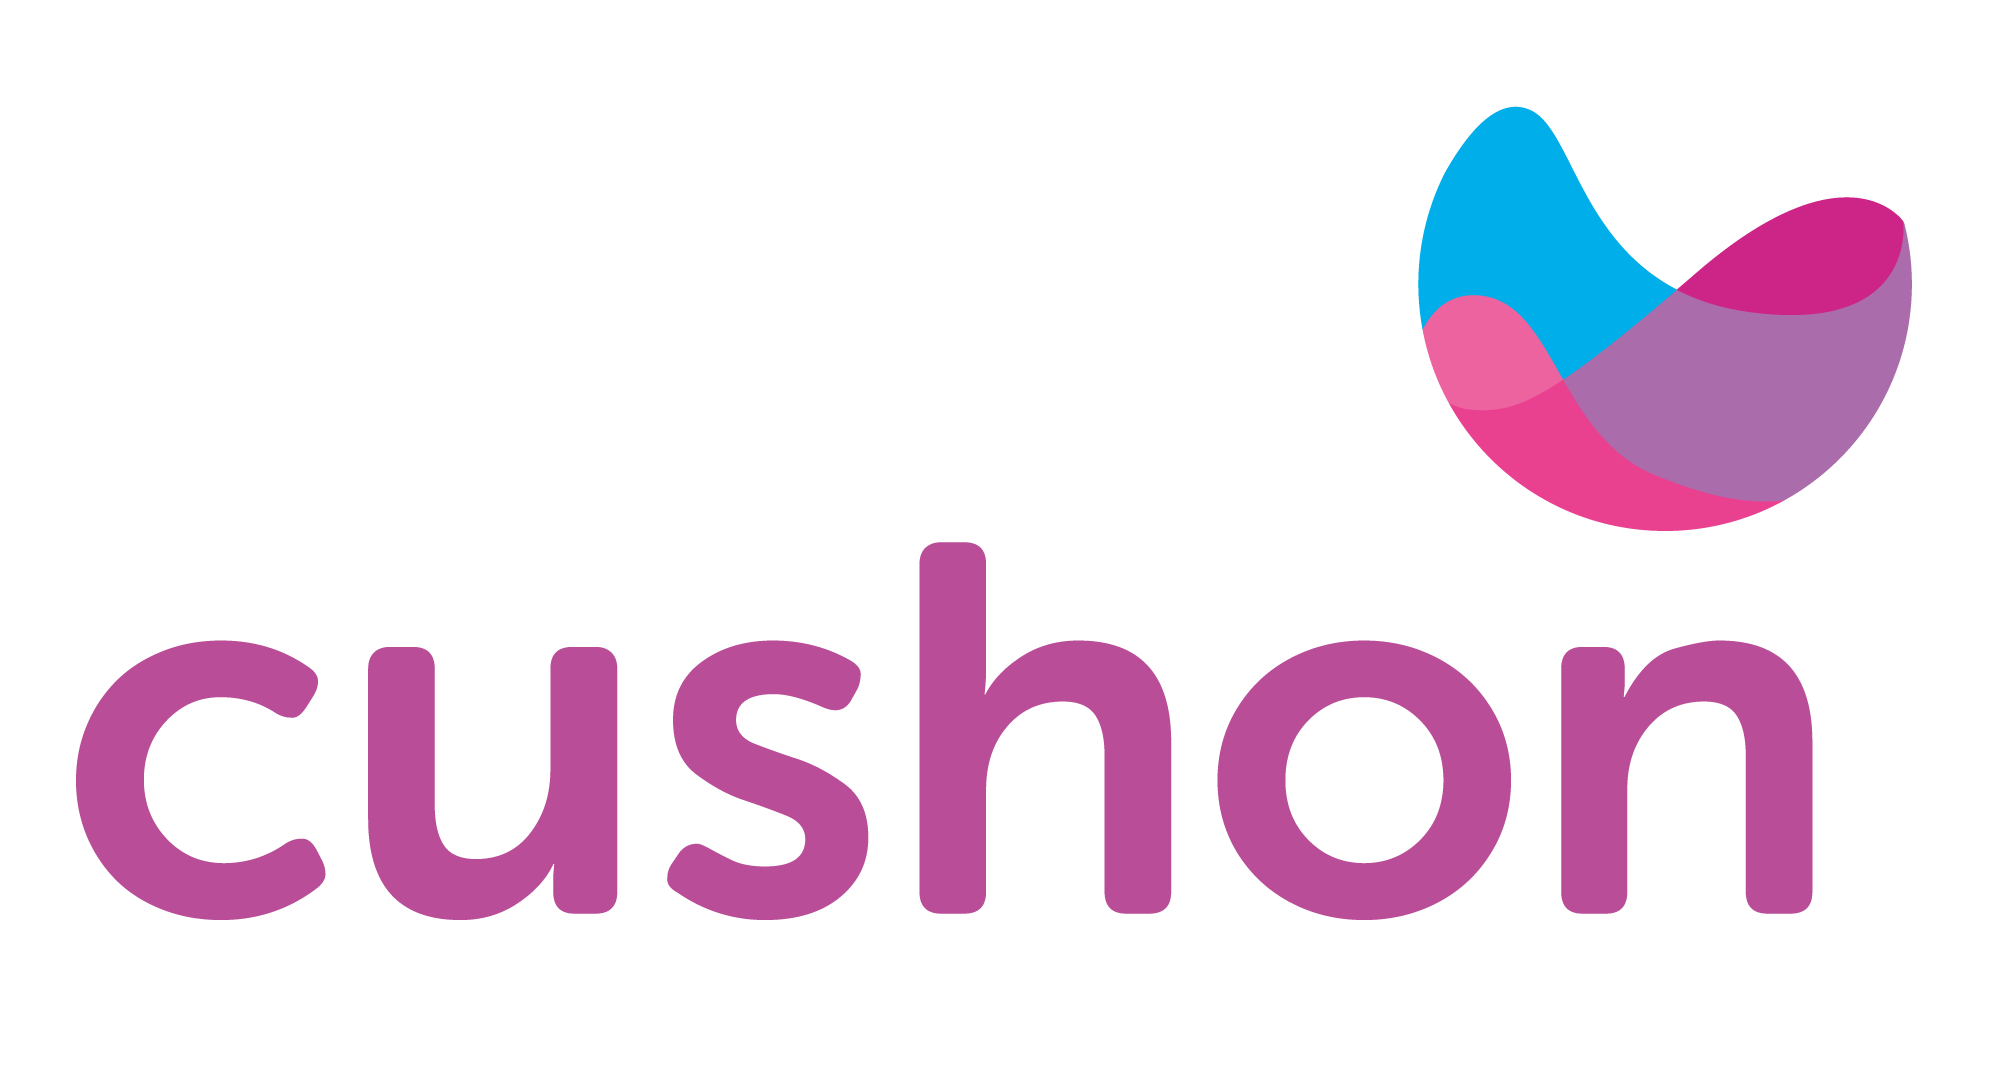 cushon-final-logo-CMYK-larger-size